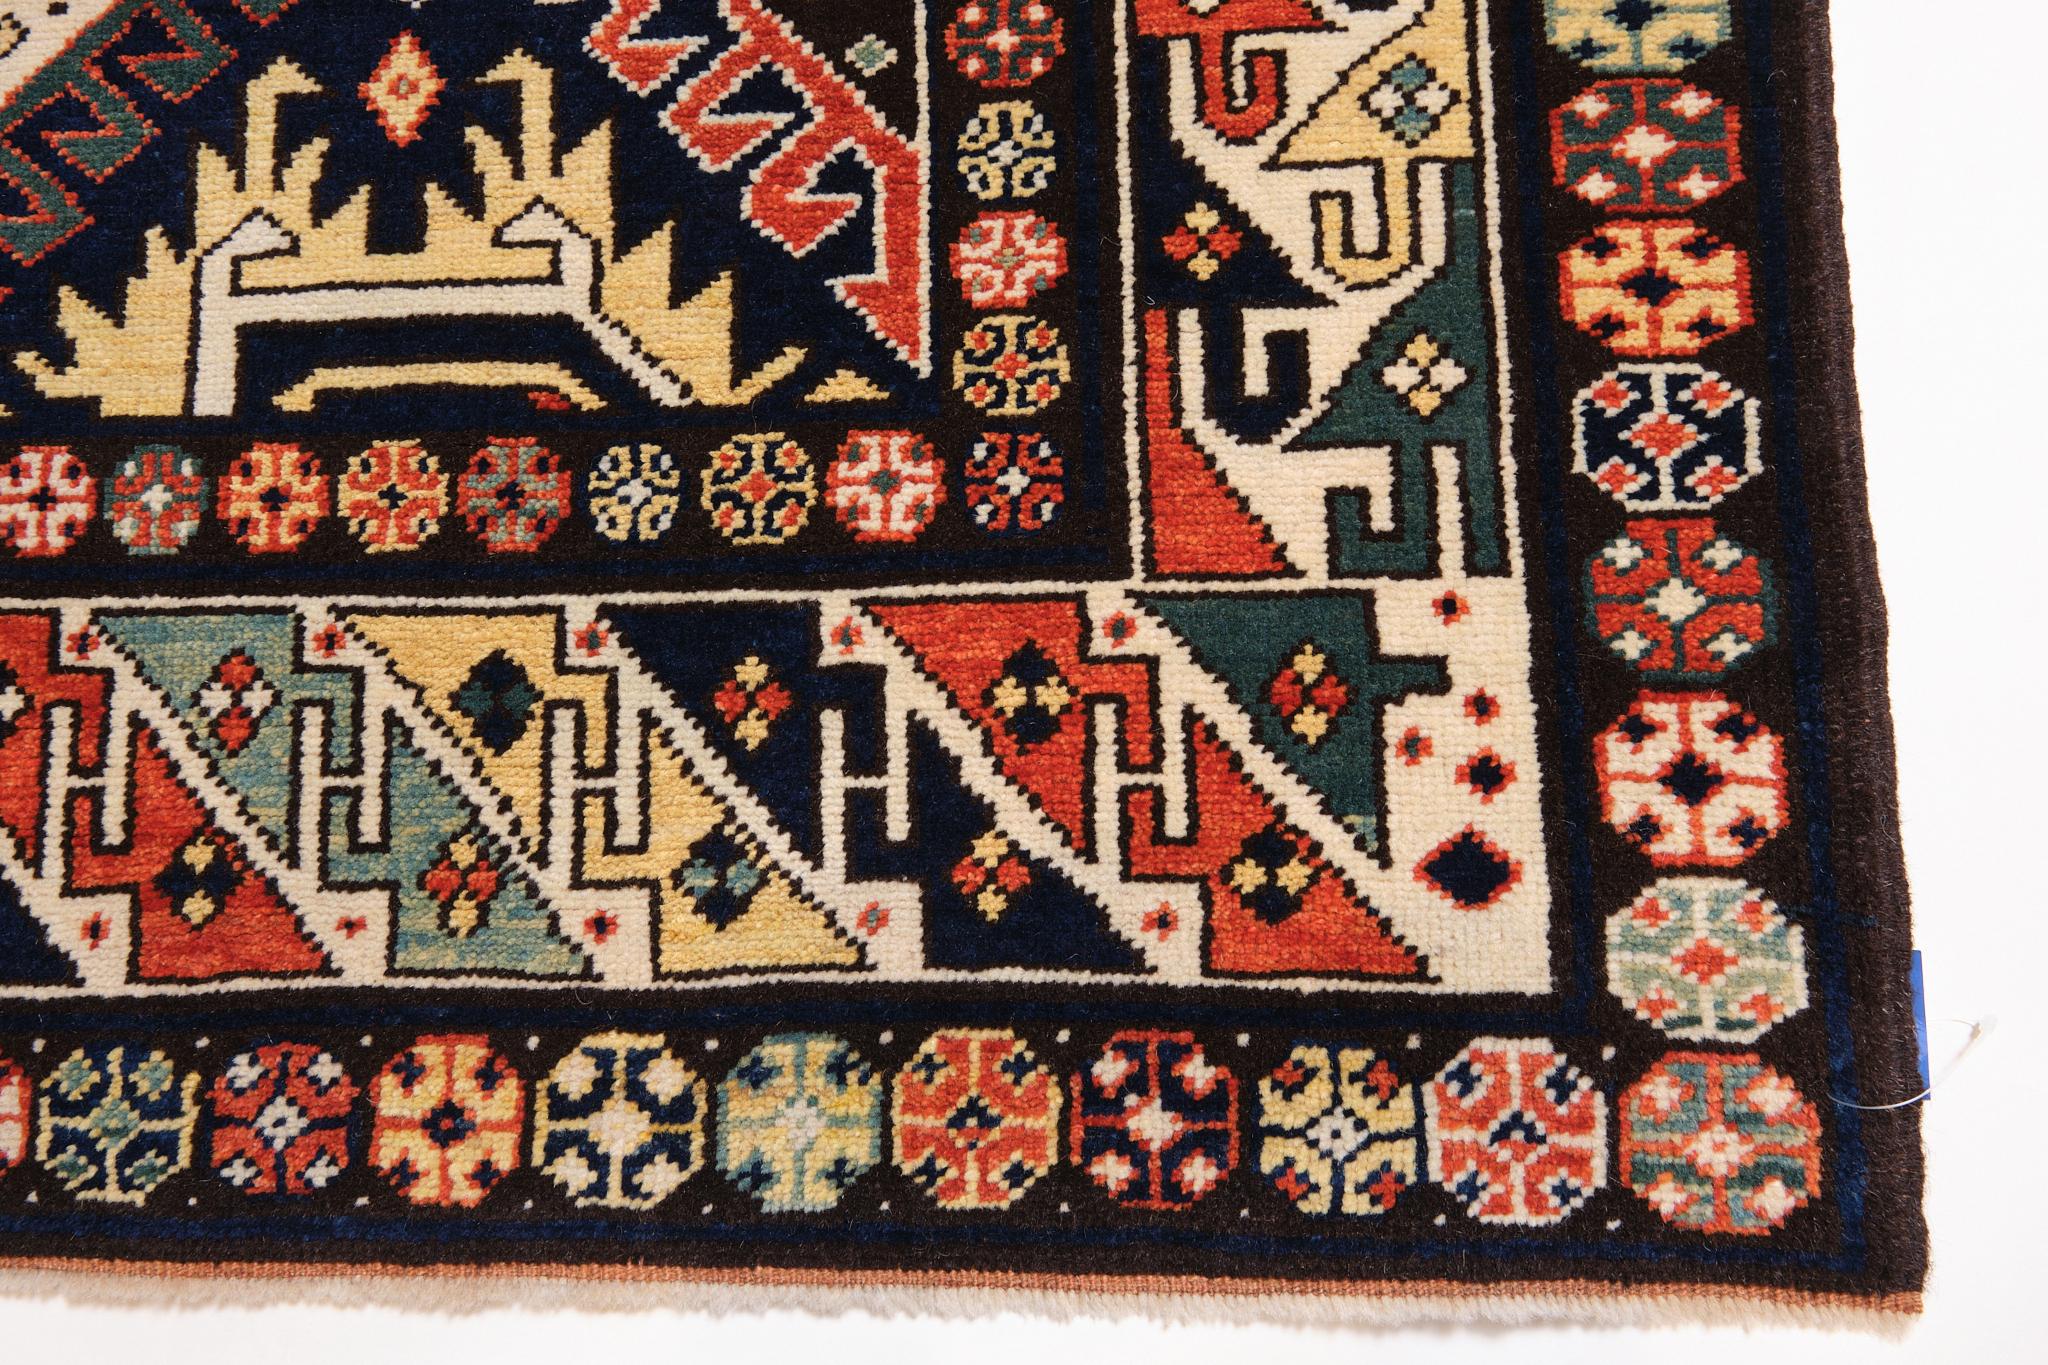 Vegetable Dyed Ararat Rugs Derbend Kazak Rug, 19th C. Caucasian Revival Carpet Natural Dyed For Sale